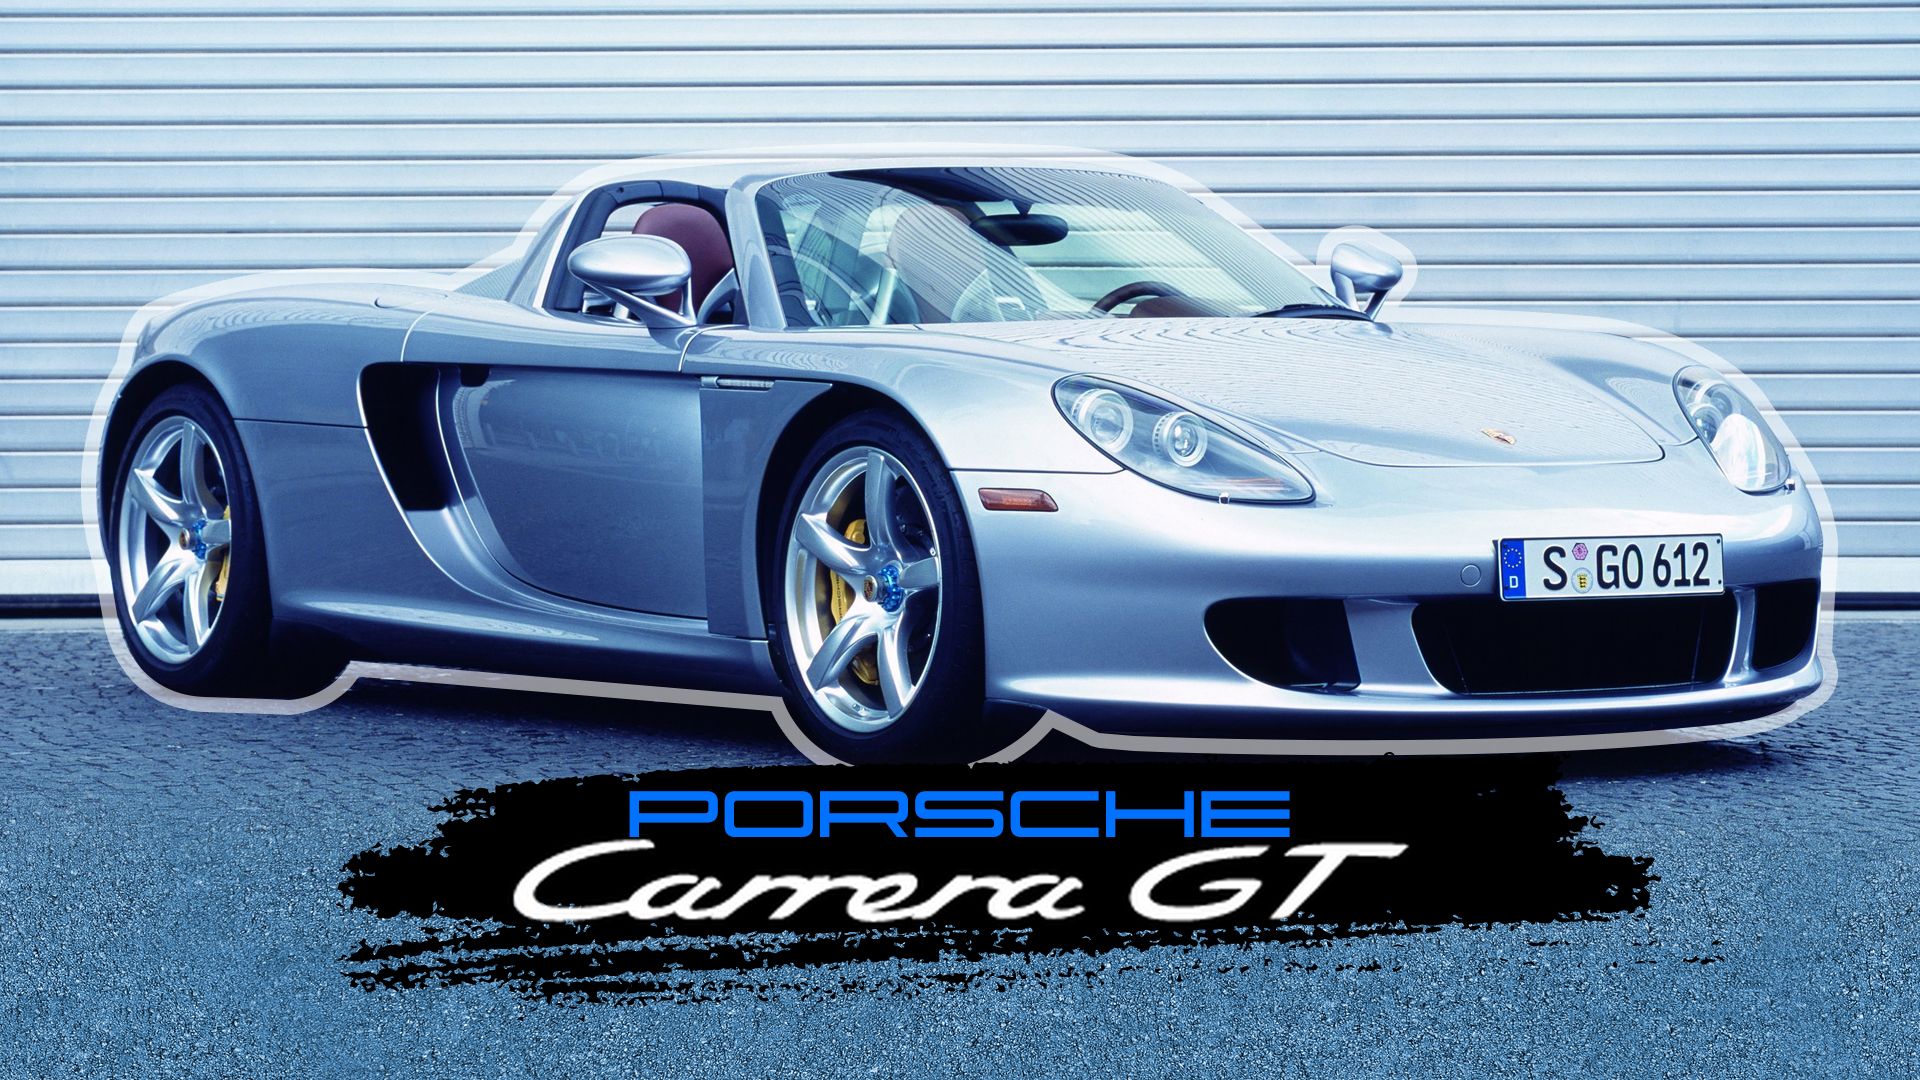 Porsche Carrera GT - Performance, Price, and Photos